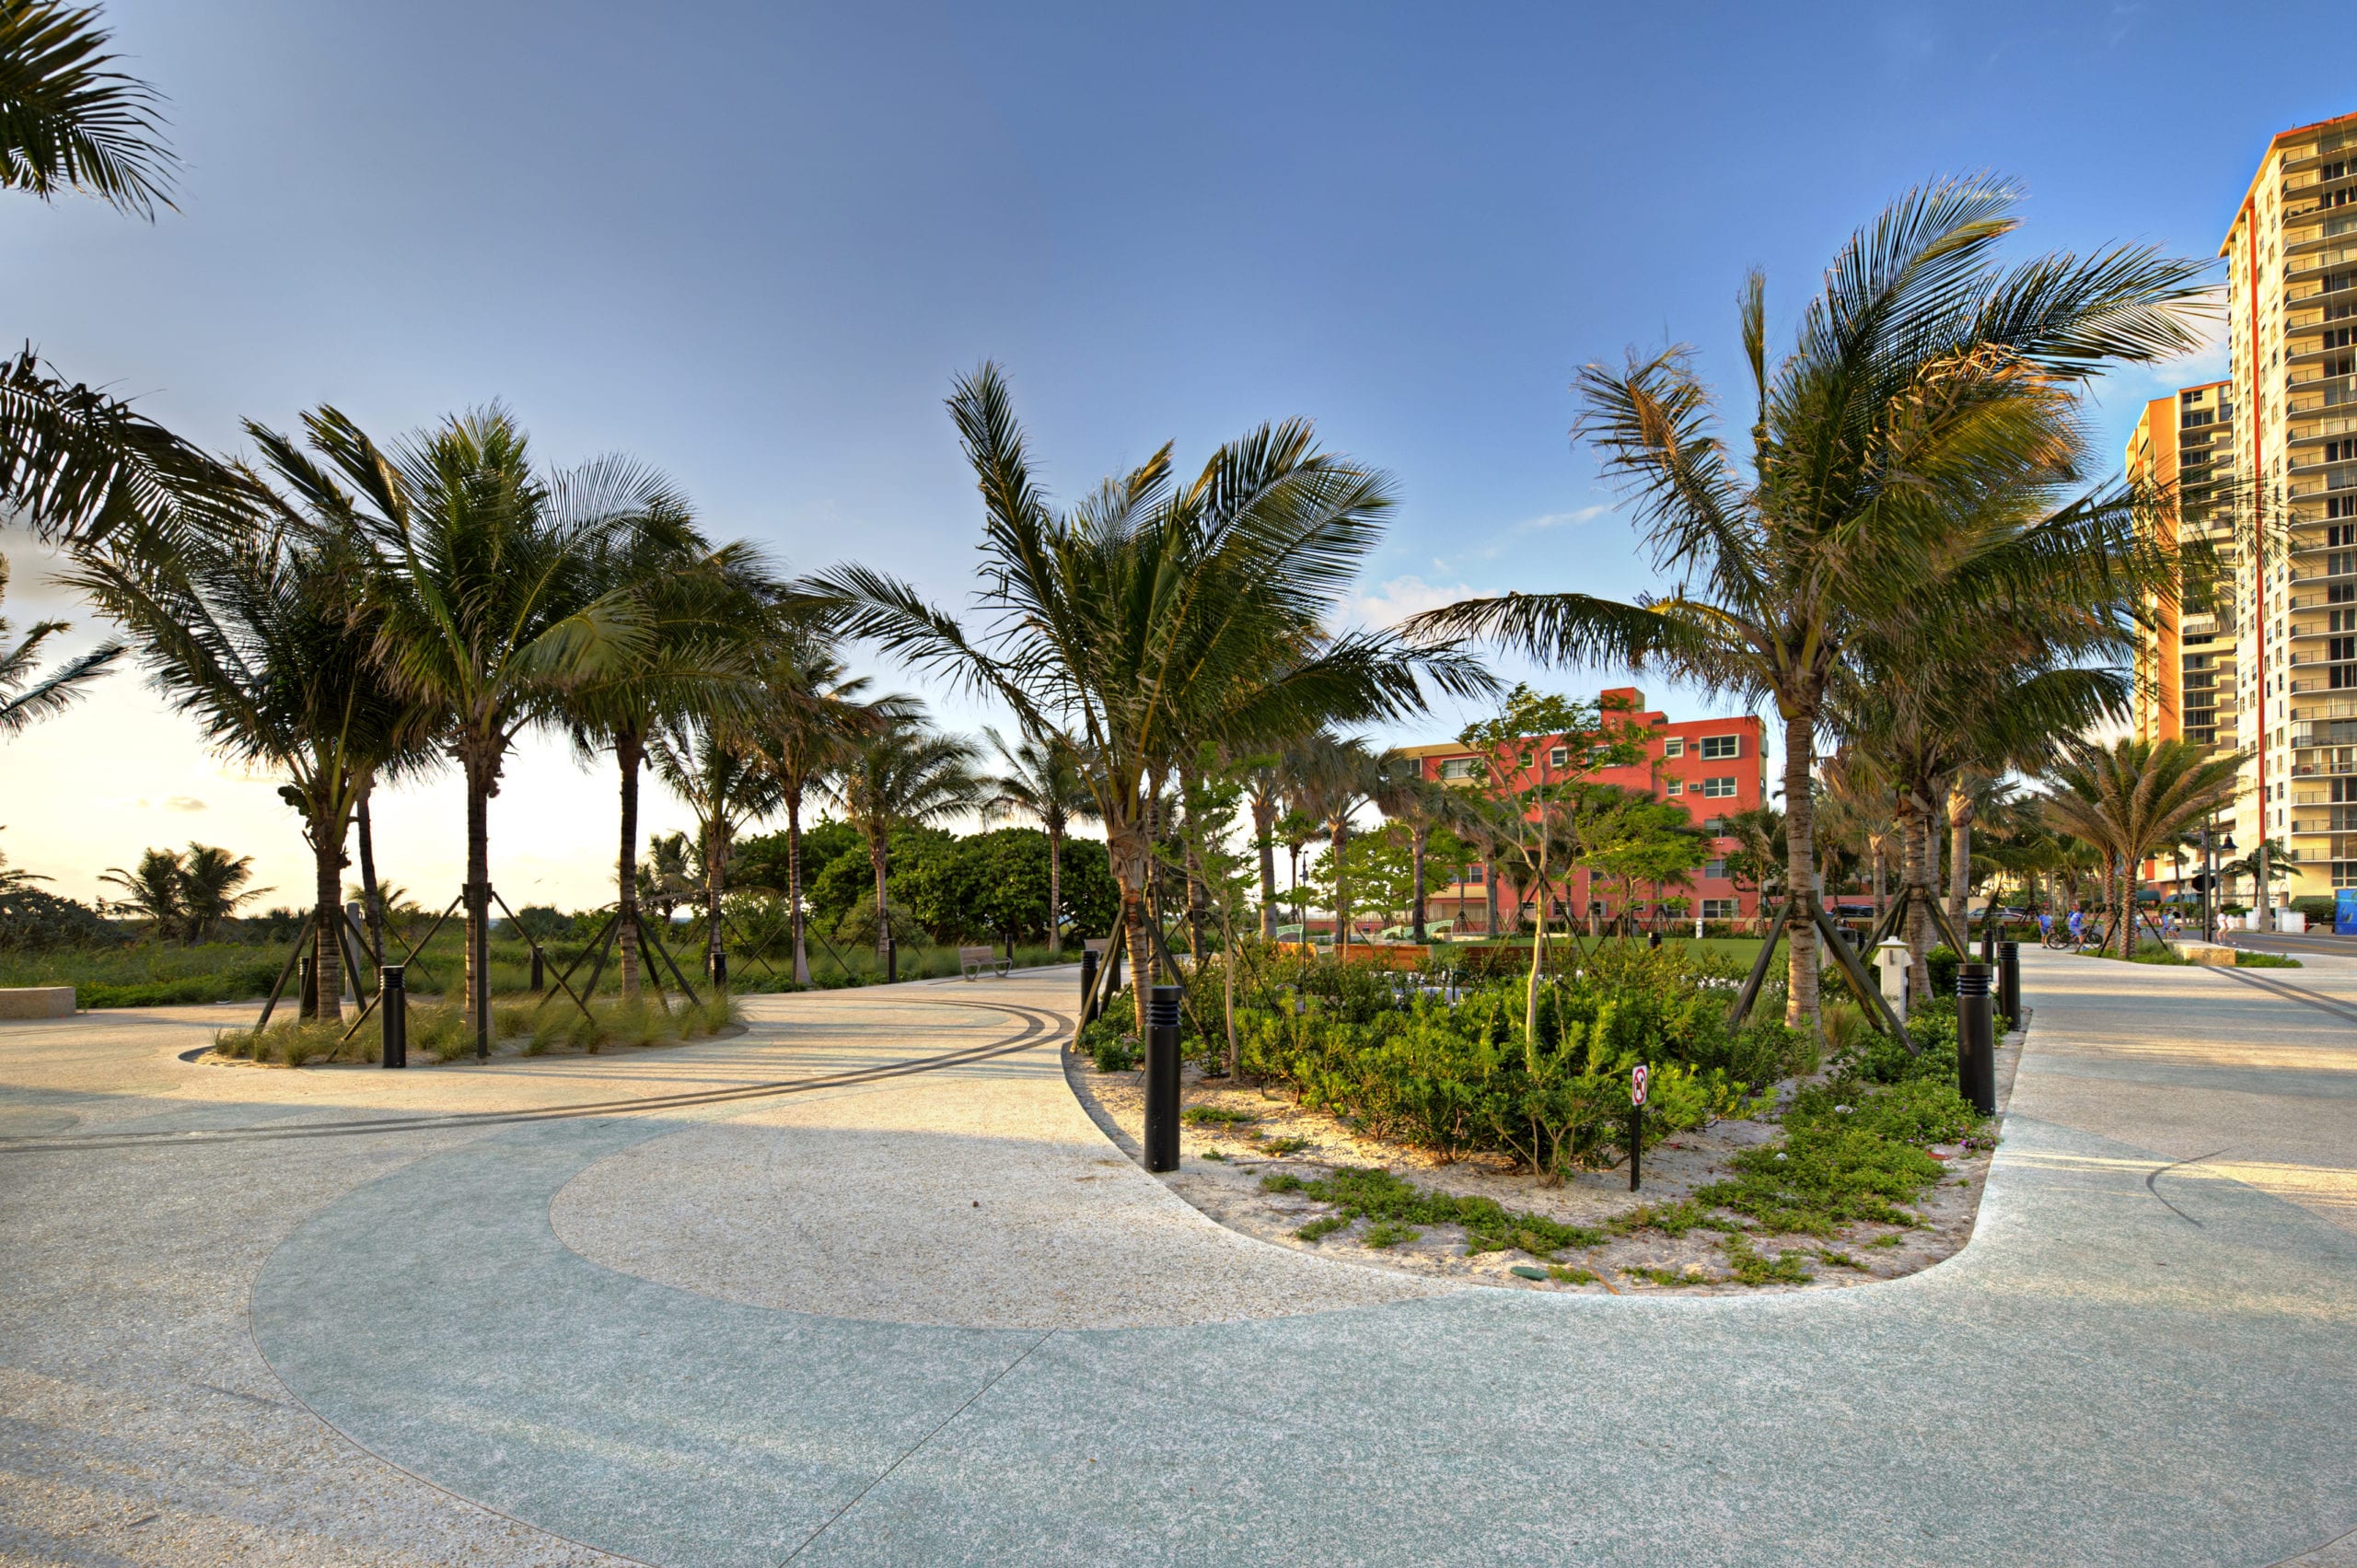 EDSA Pompano Beach Boulevard  Walkway with palm trees lining it